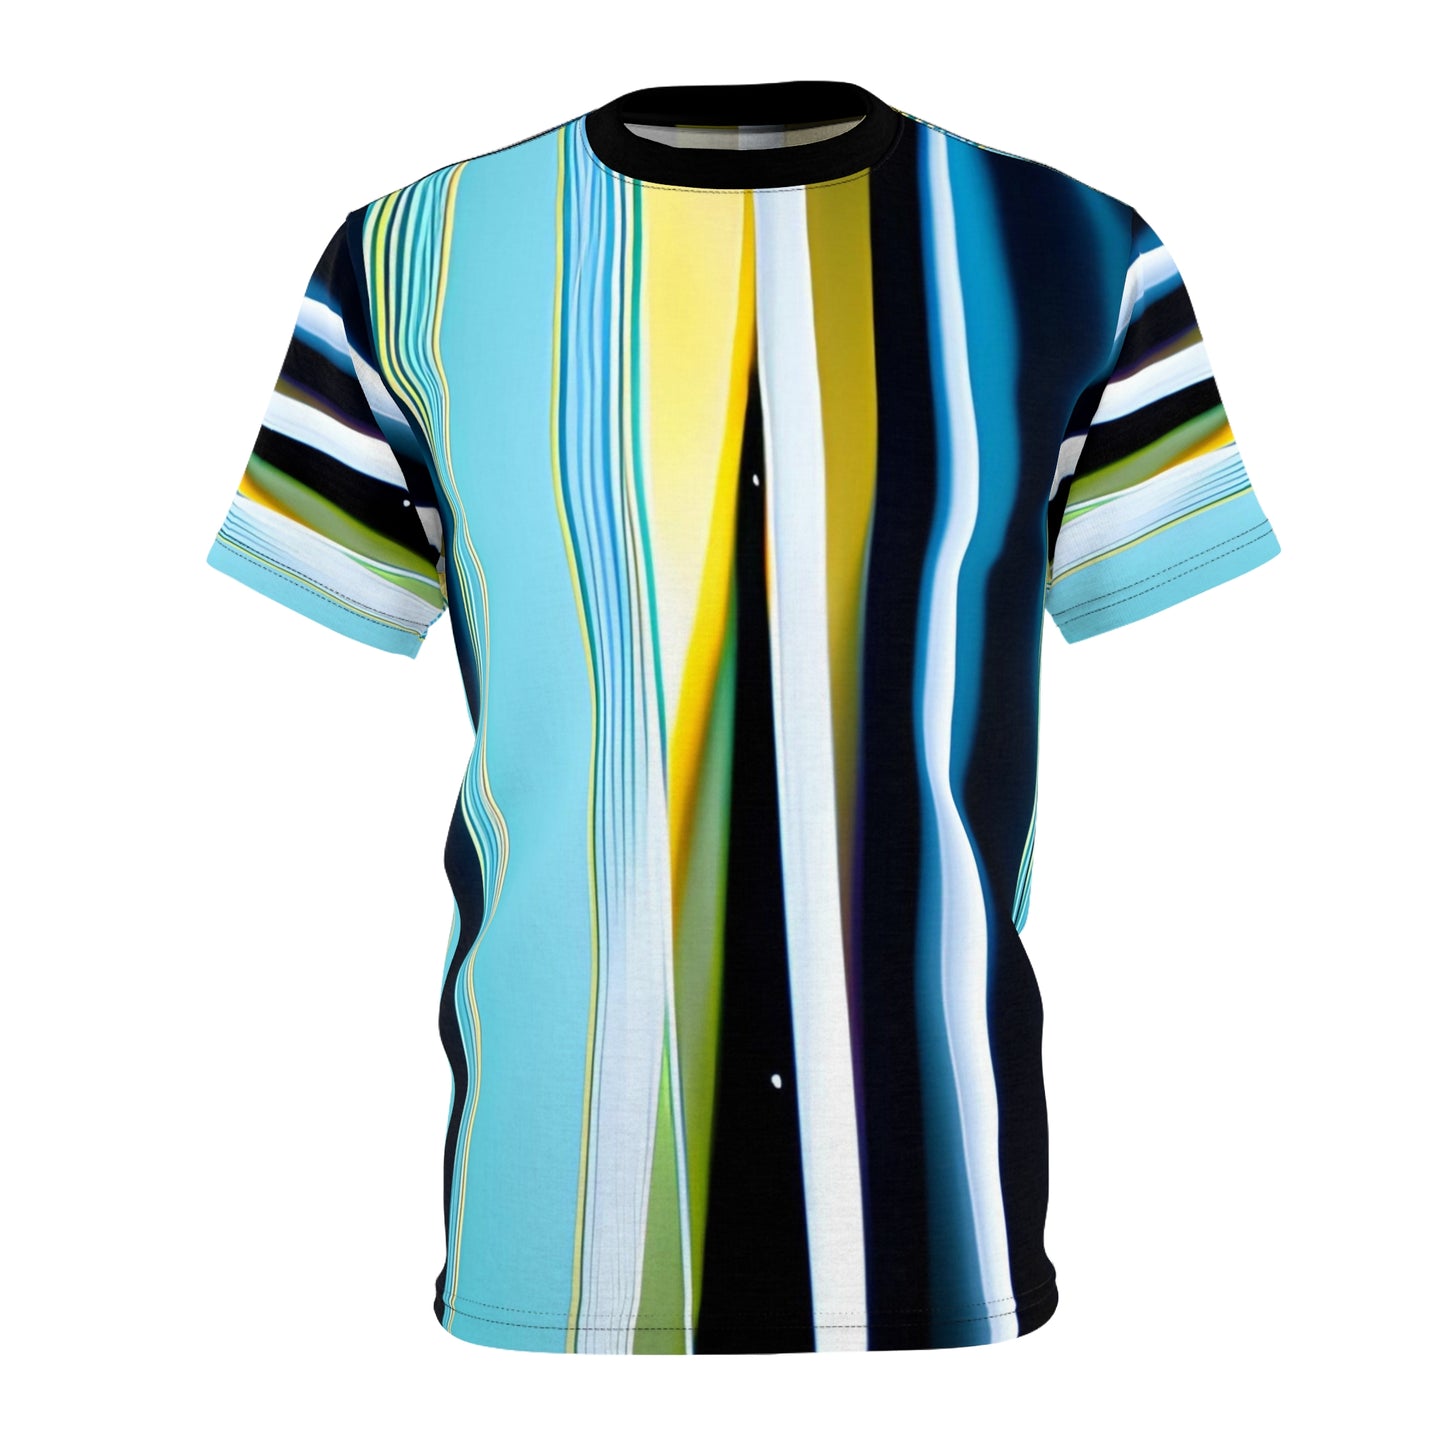 Blue Horizons shons Cut & Sew Tee T's T-shirt